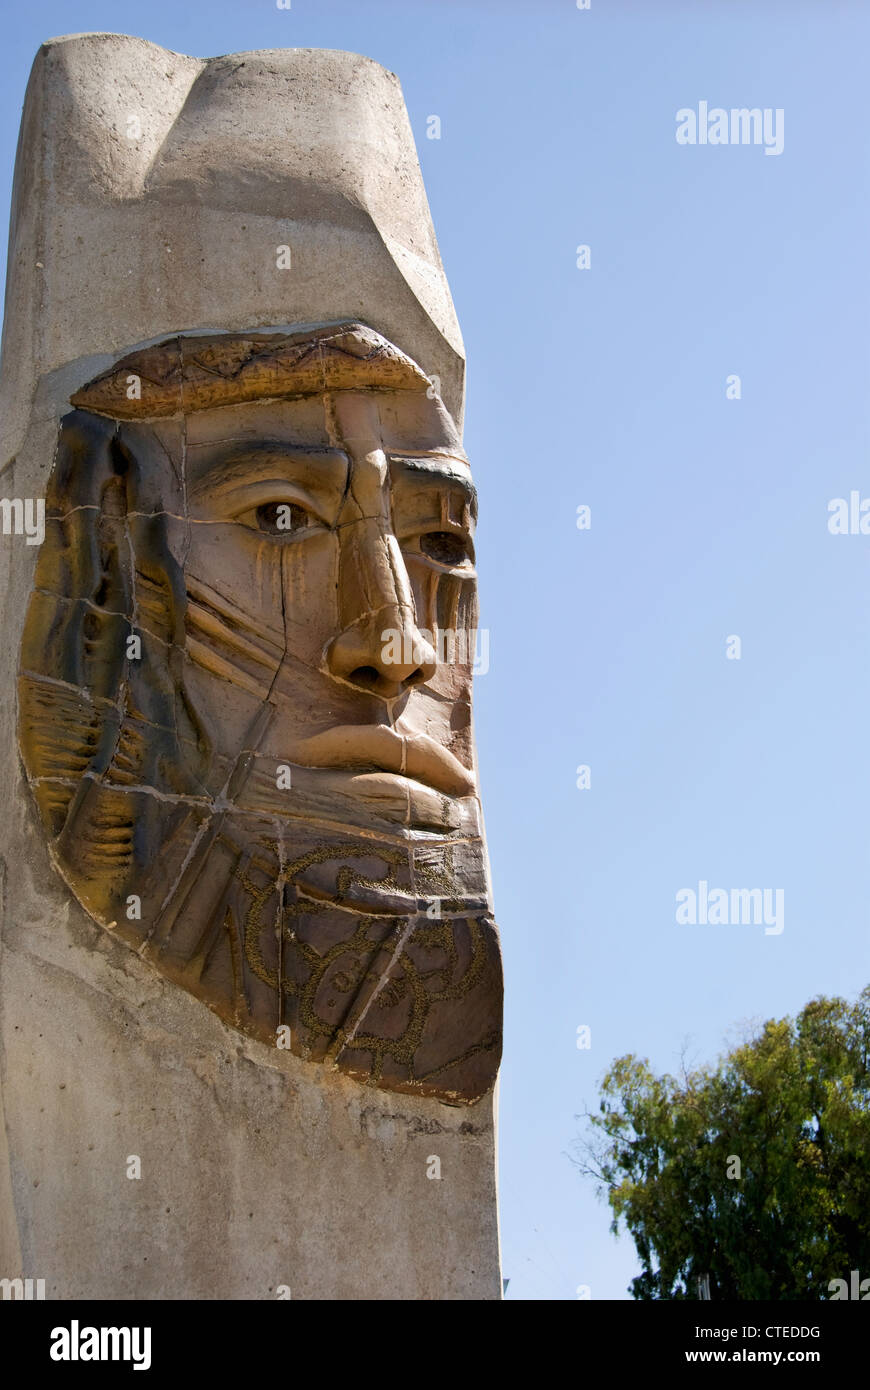 La scultura di un volto umano; Mendoza, Argentina Foto Stock